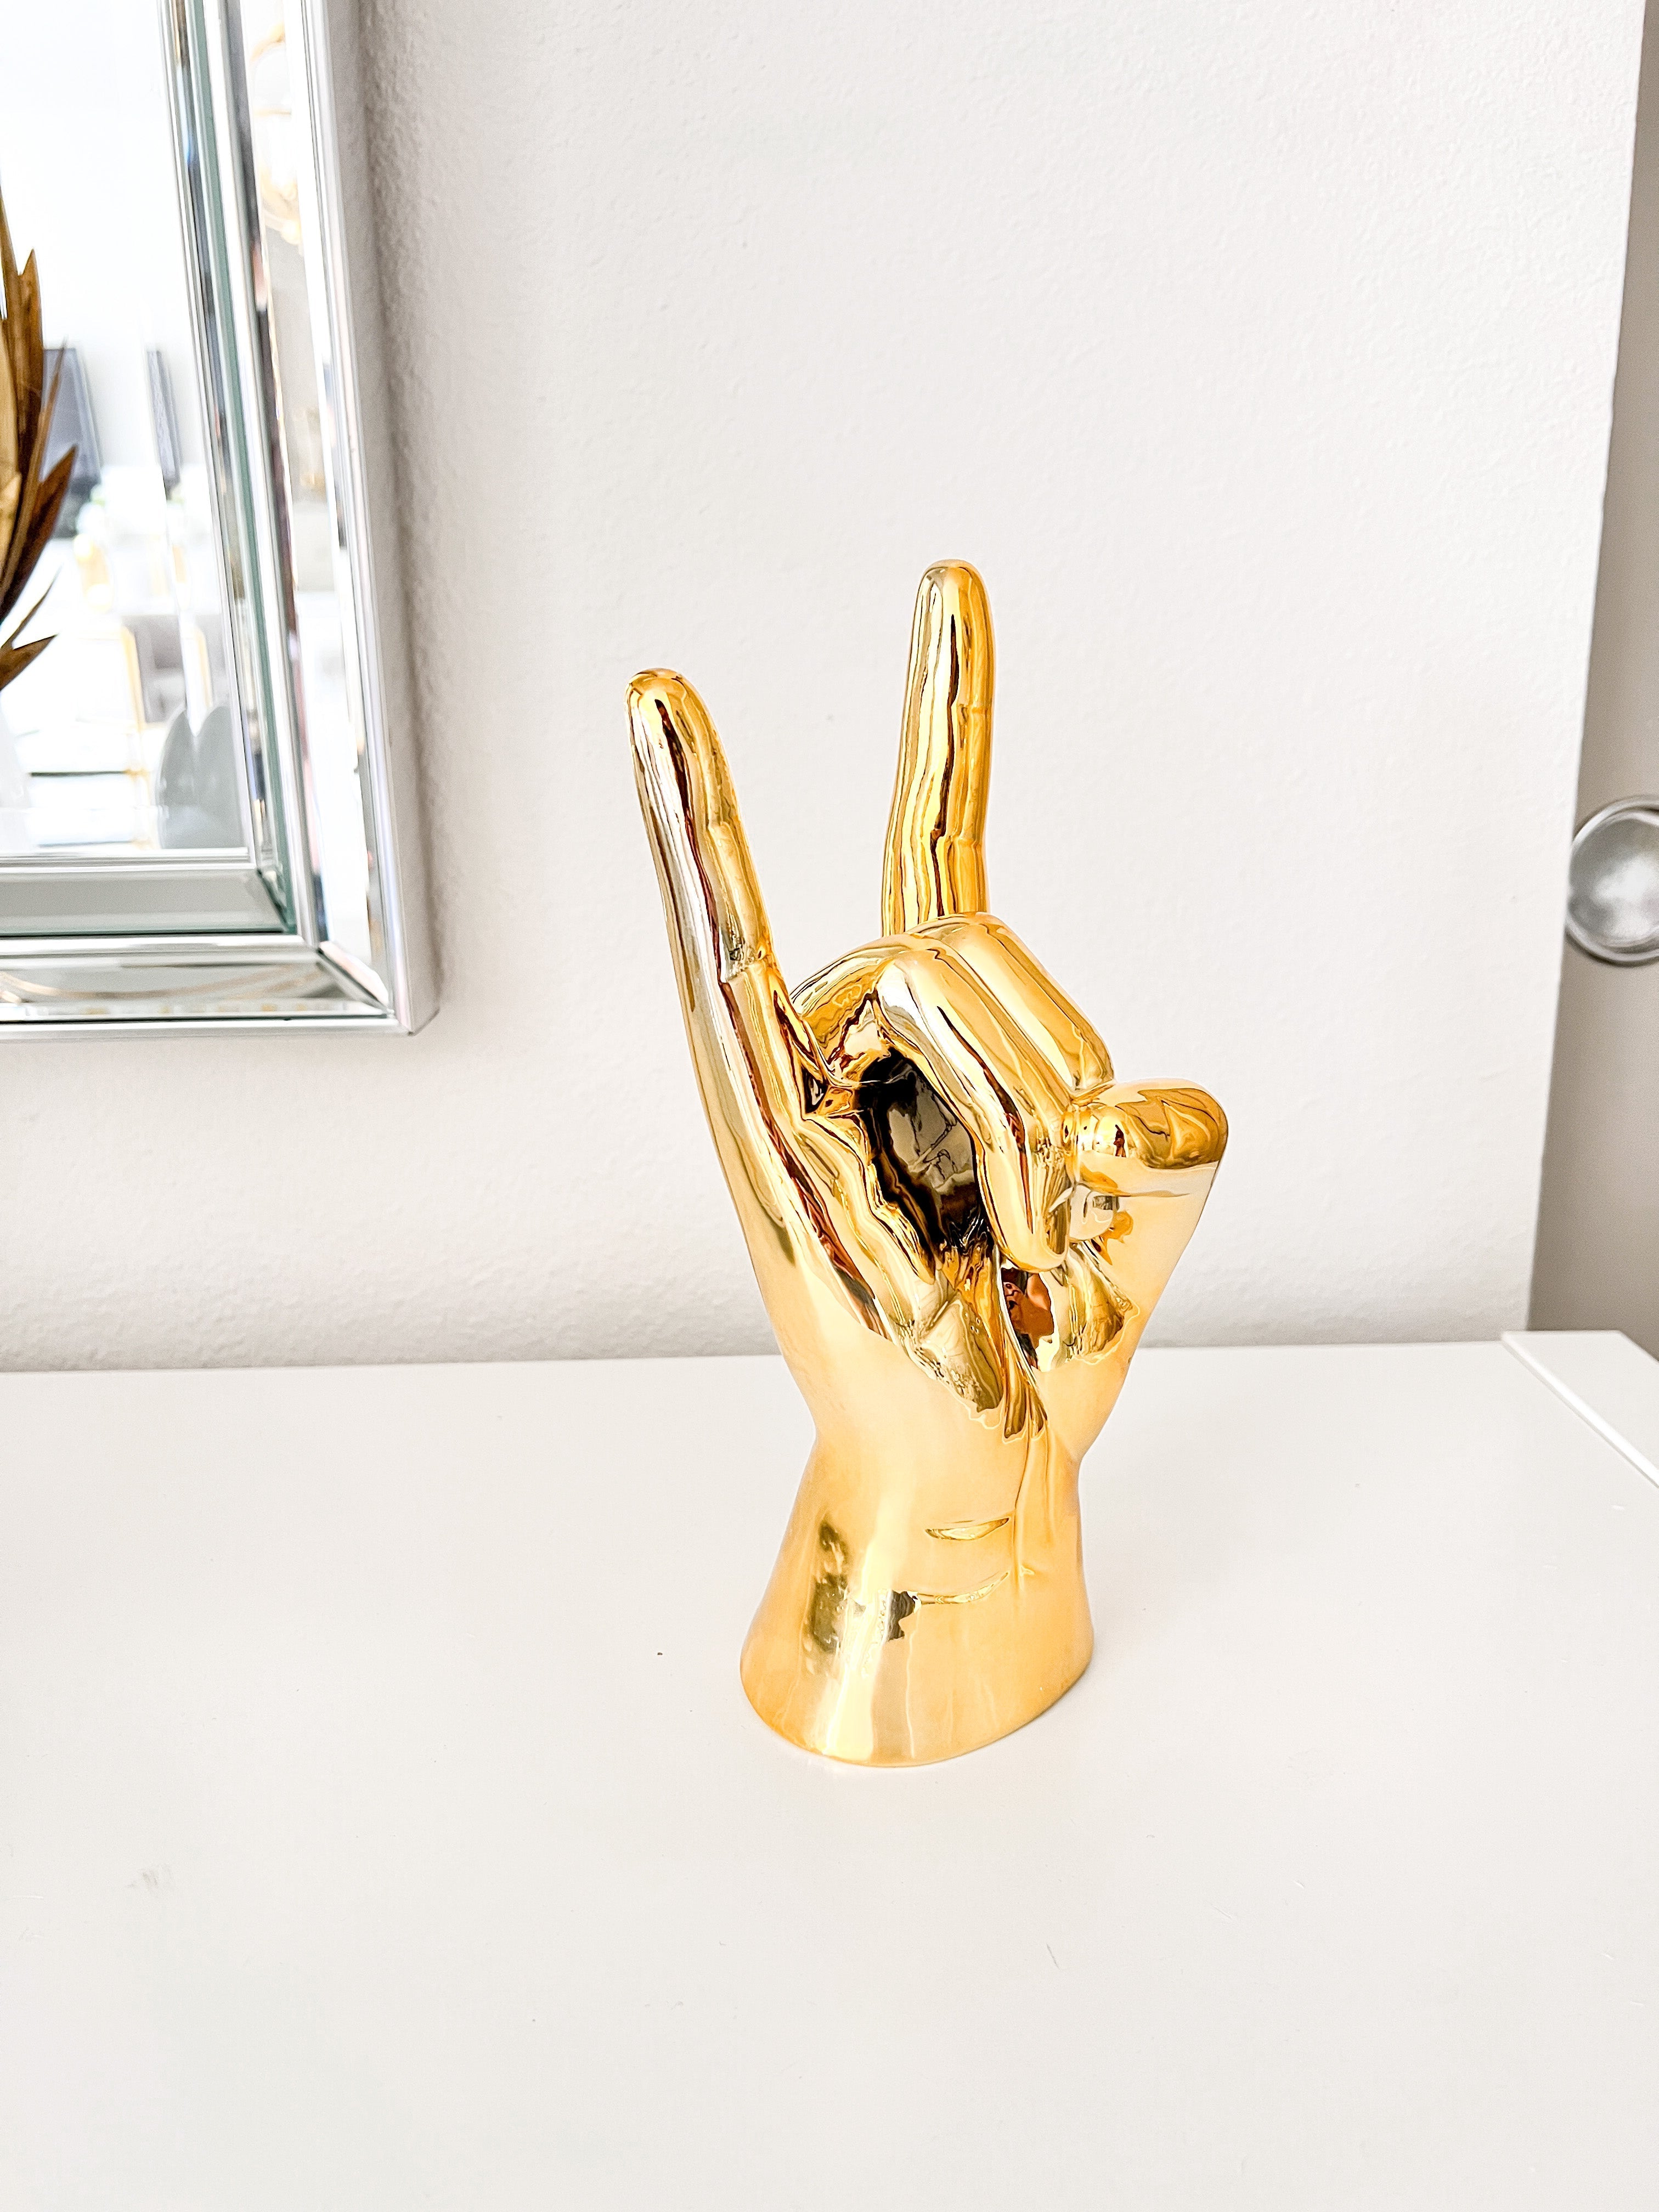 Gold Rock On Hand sculpture Key Holder - HTS HOME DECOR